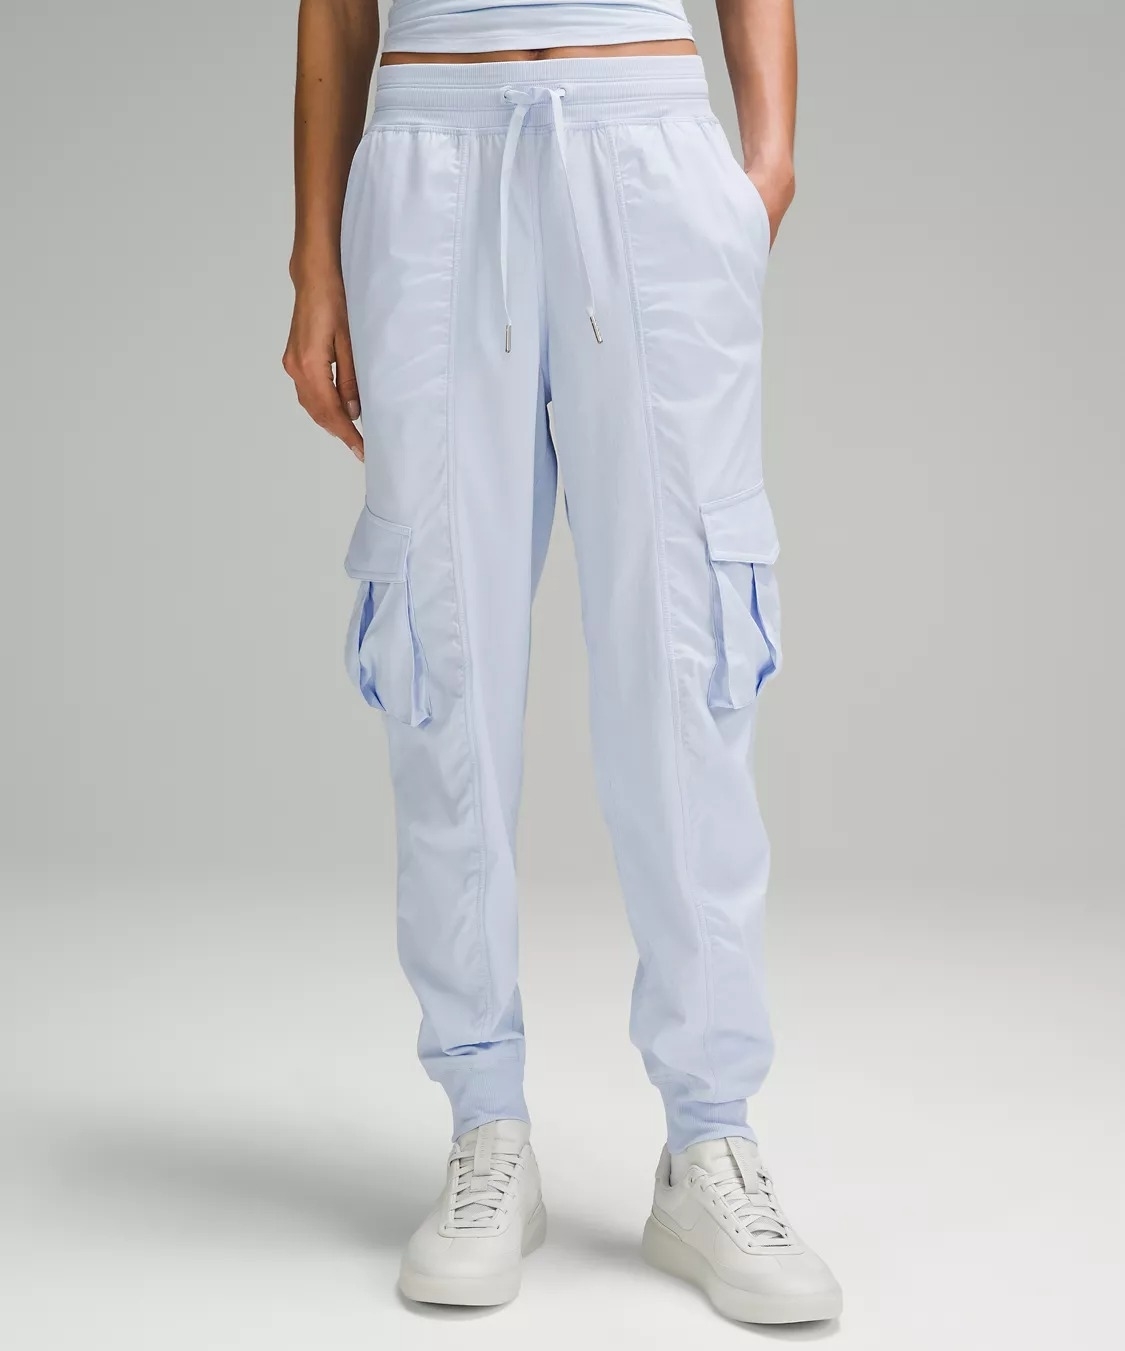 Model wearing blue dance-inspired cargo pants